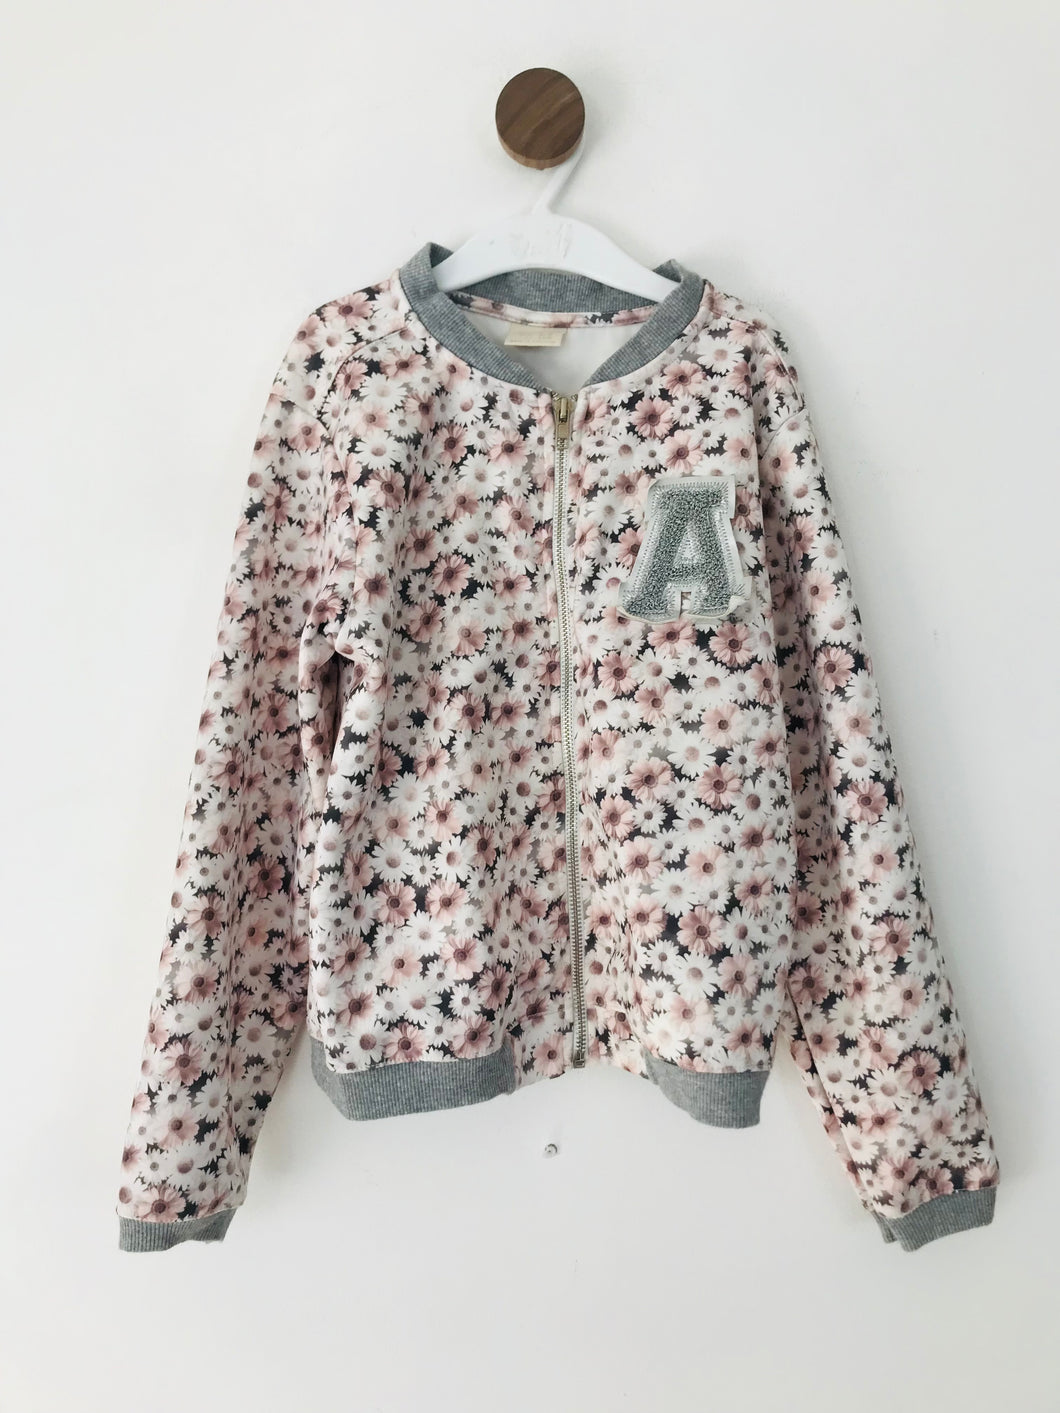 Zara Kid's Floral Bomber Jacket | 7/8 Years | Pink